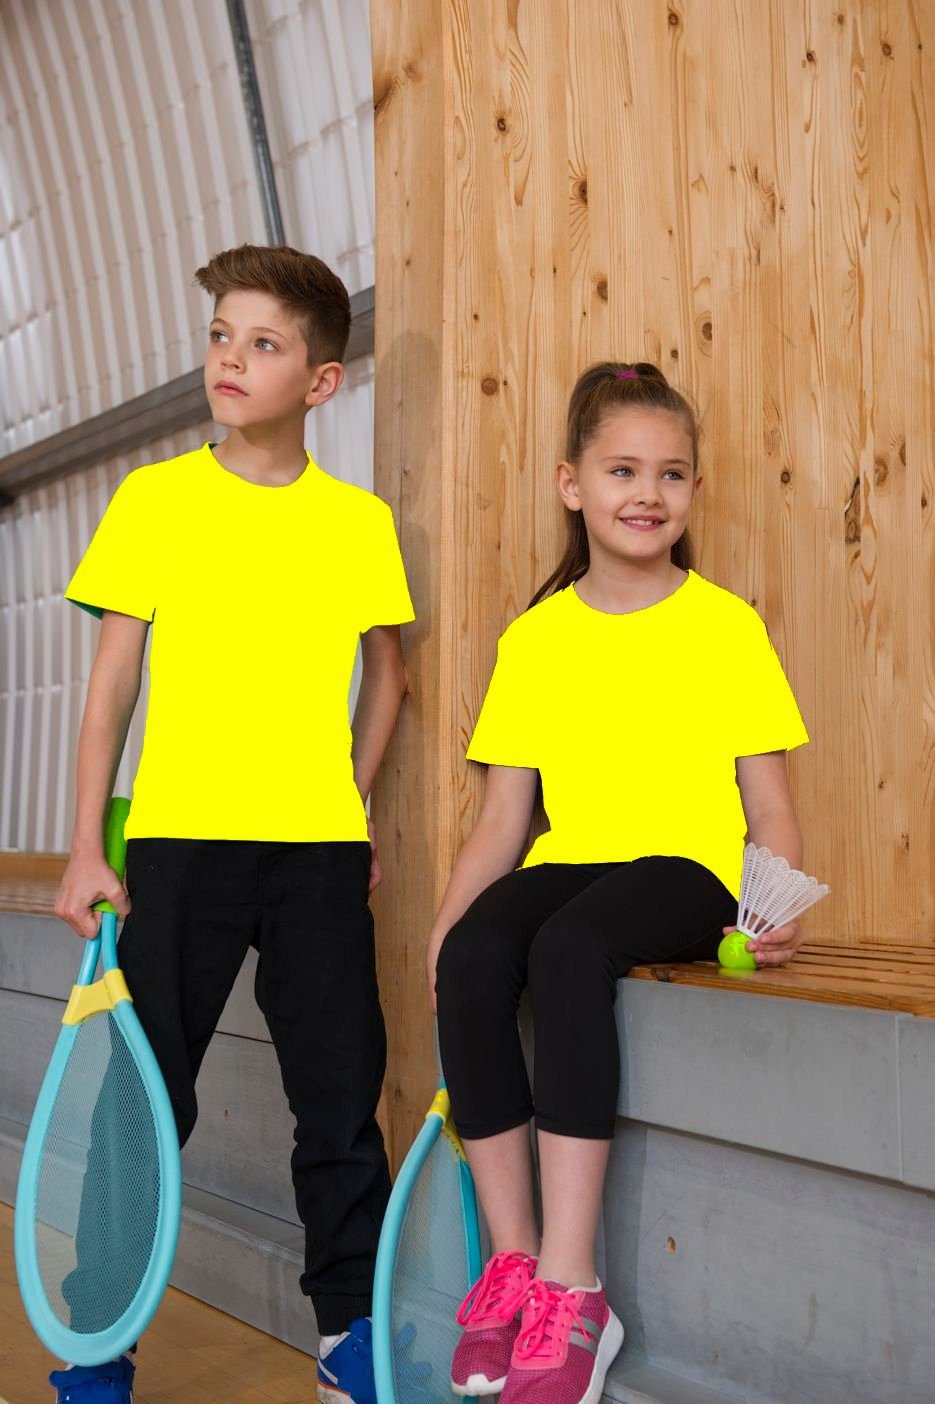 AWDIS T-Shirt NEON Kinder Neongelb, Neongrün, Neonpink, Neonorange T-Shirts Sport 